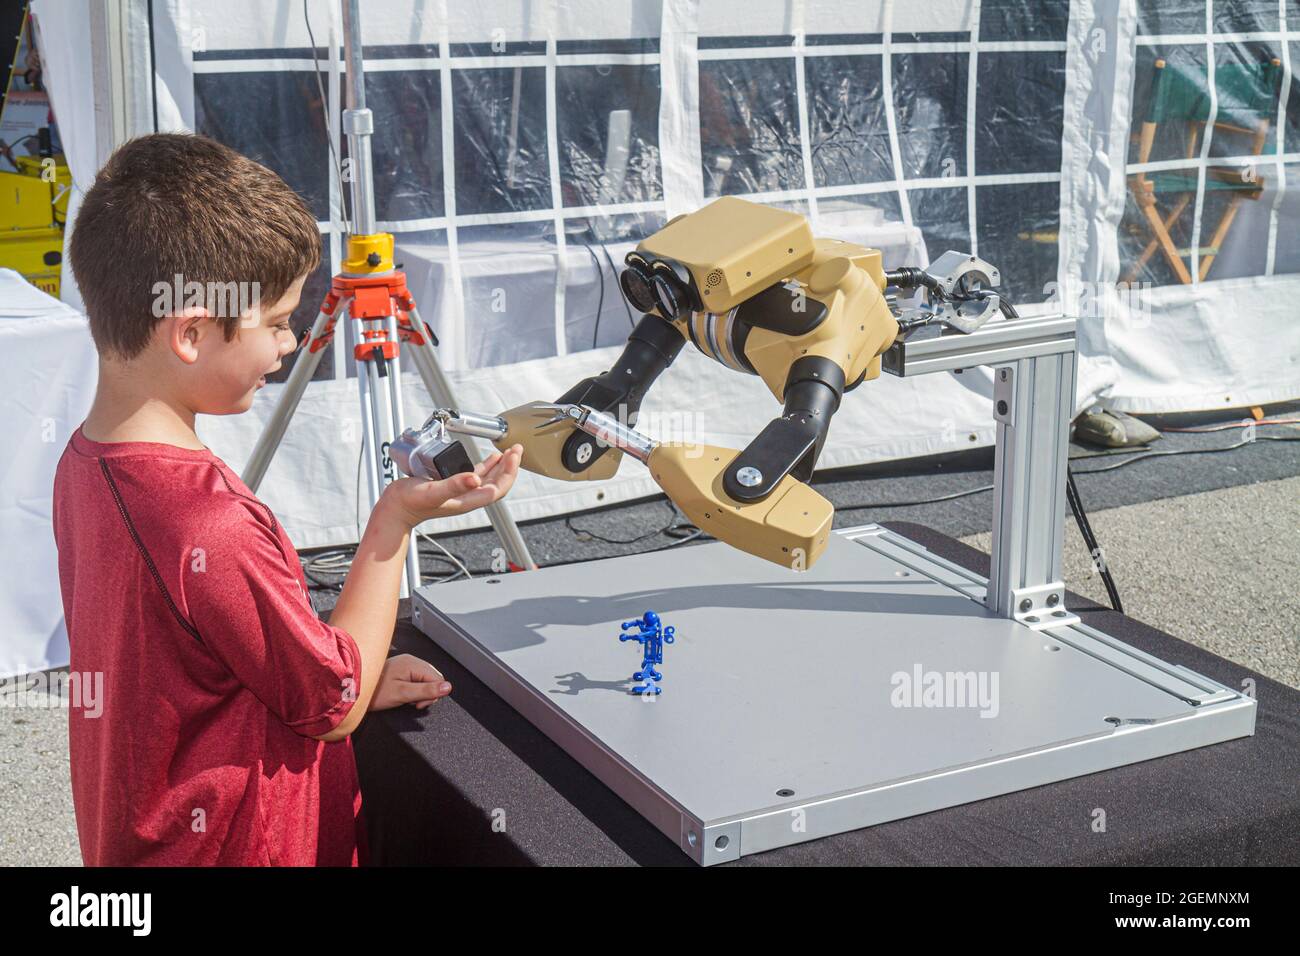 Miami Florida,Homestead Speedway,DARPA Robotics Challenge Trials telecomandato,robot robot robot armi robot ragazzo maschio bambino, Foto Stock